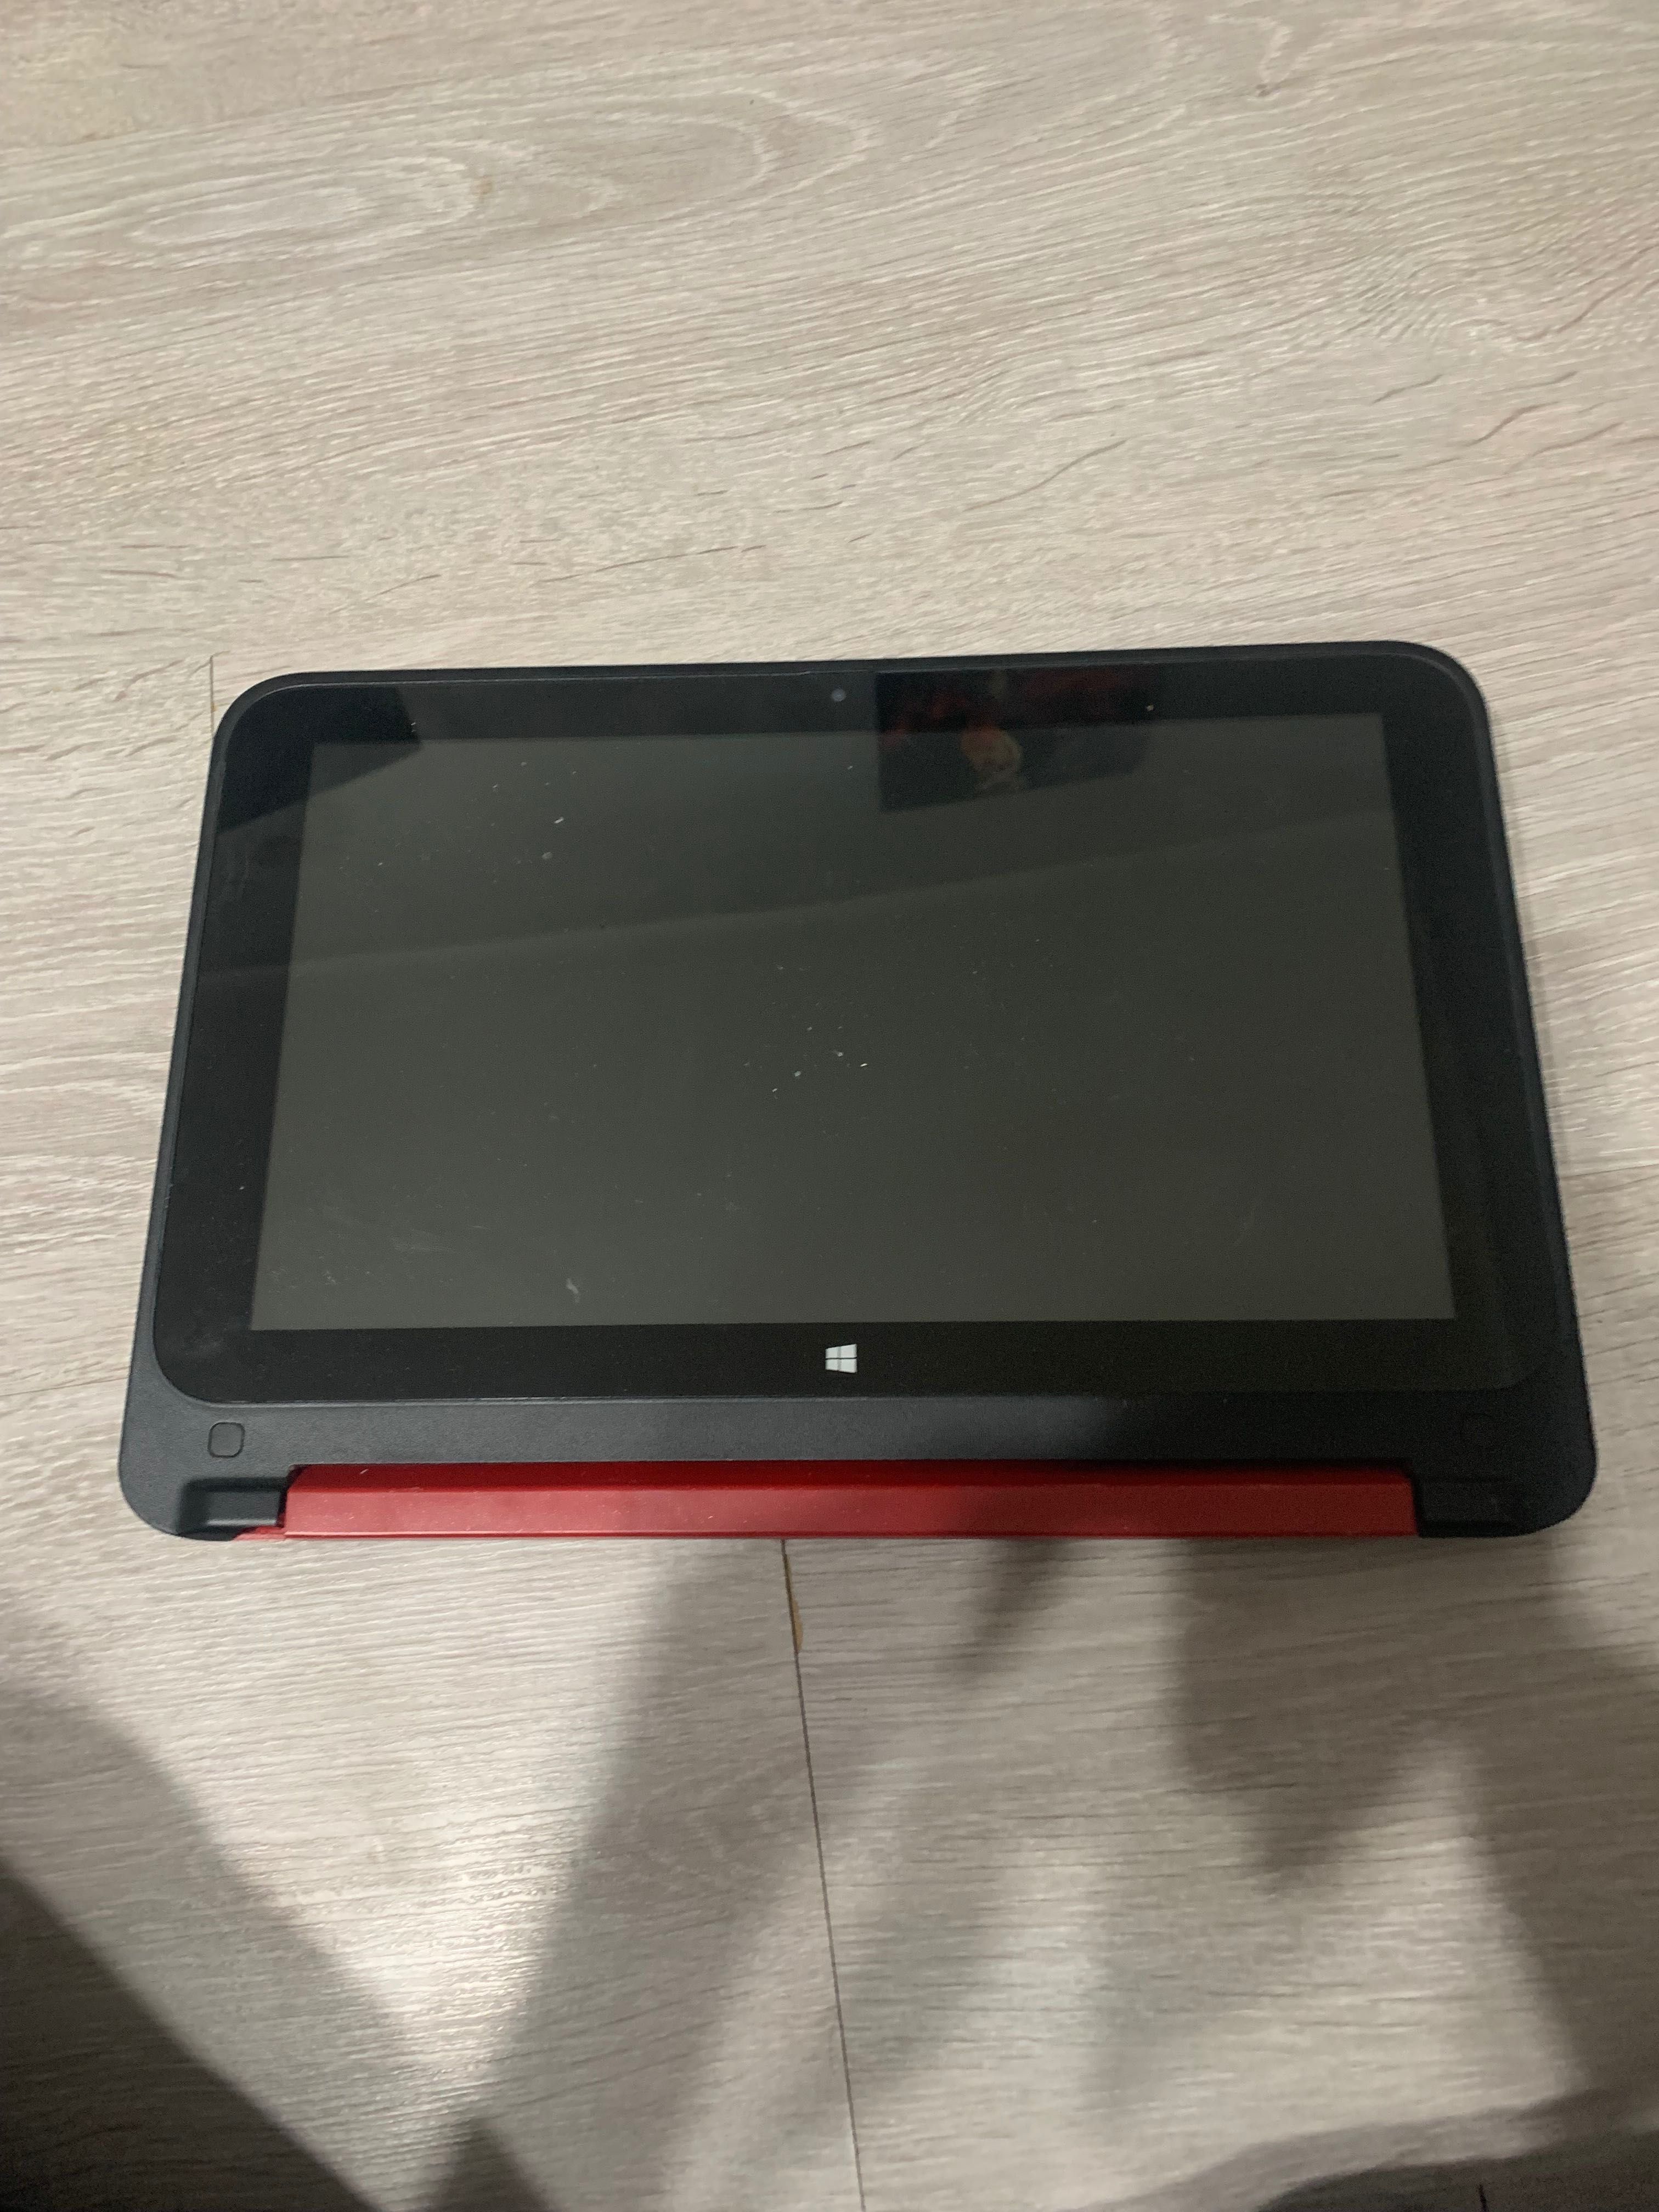 Laptop x360 310G1